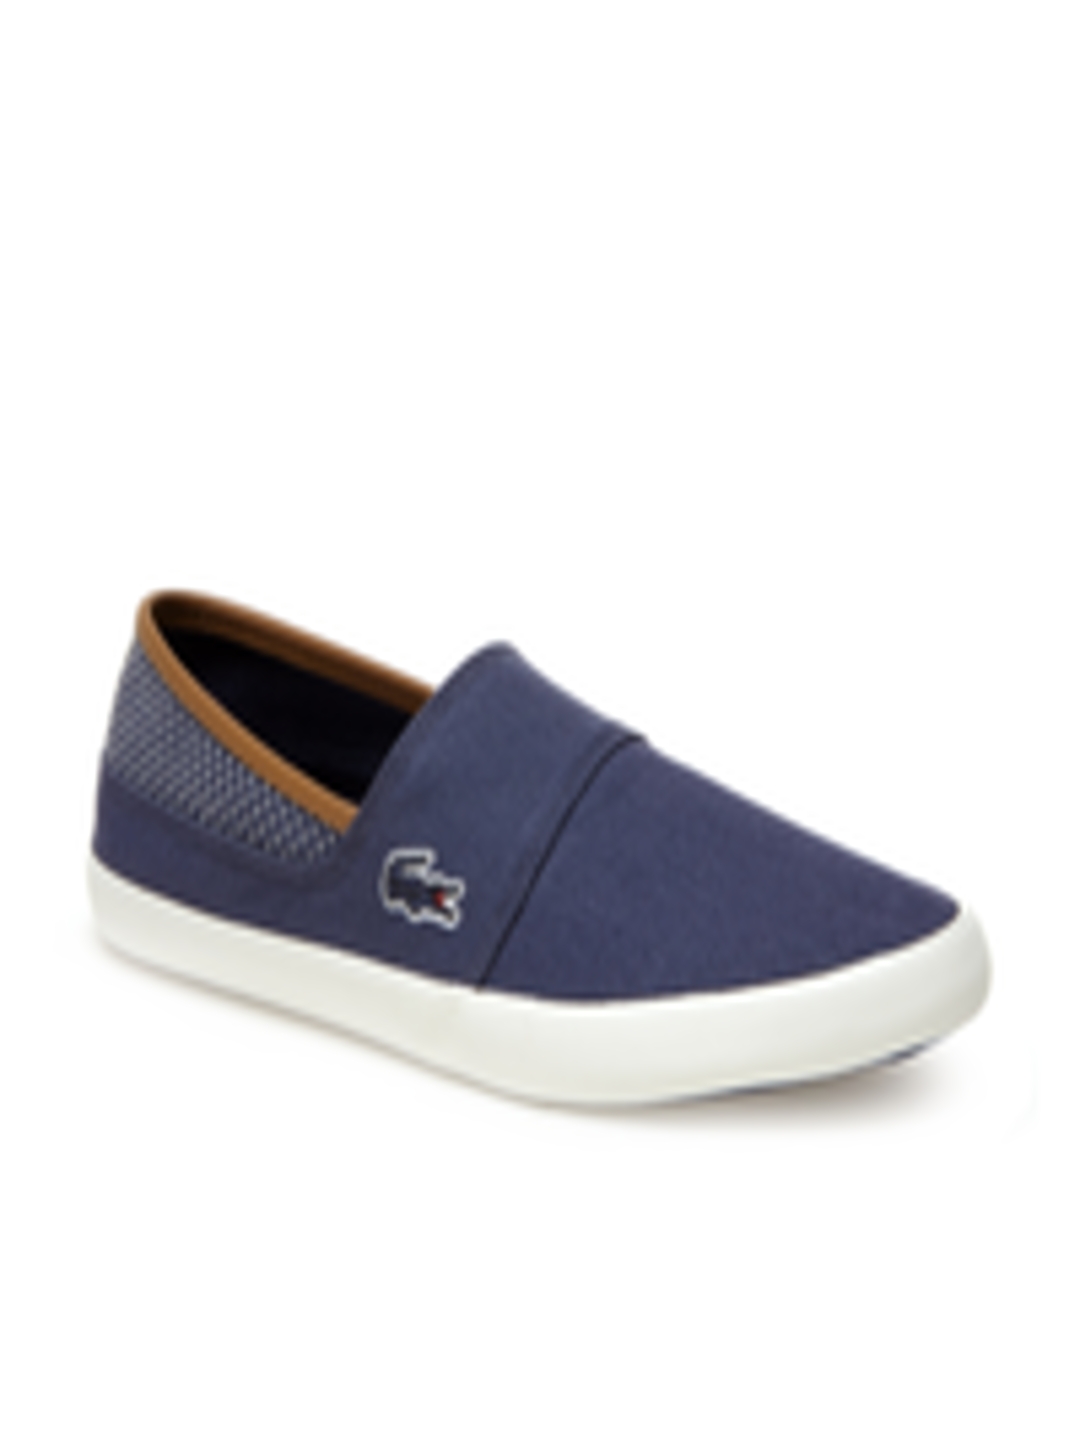 Buy Lacoste Men Blue Slip On Sneakers - Casual Shoes for Men 4304650 ...